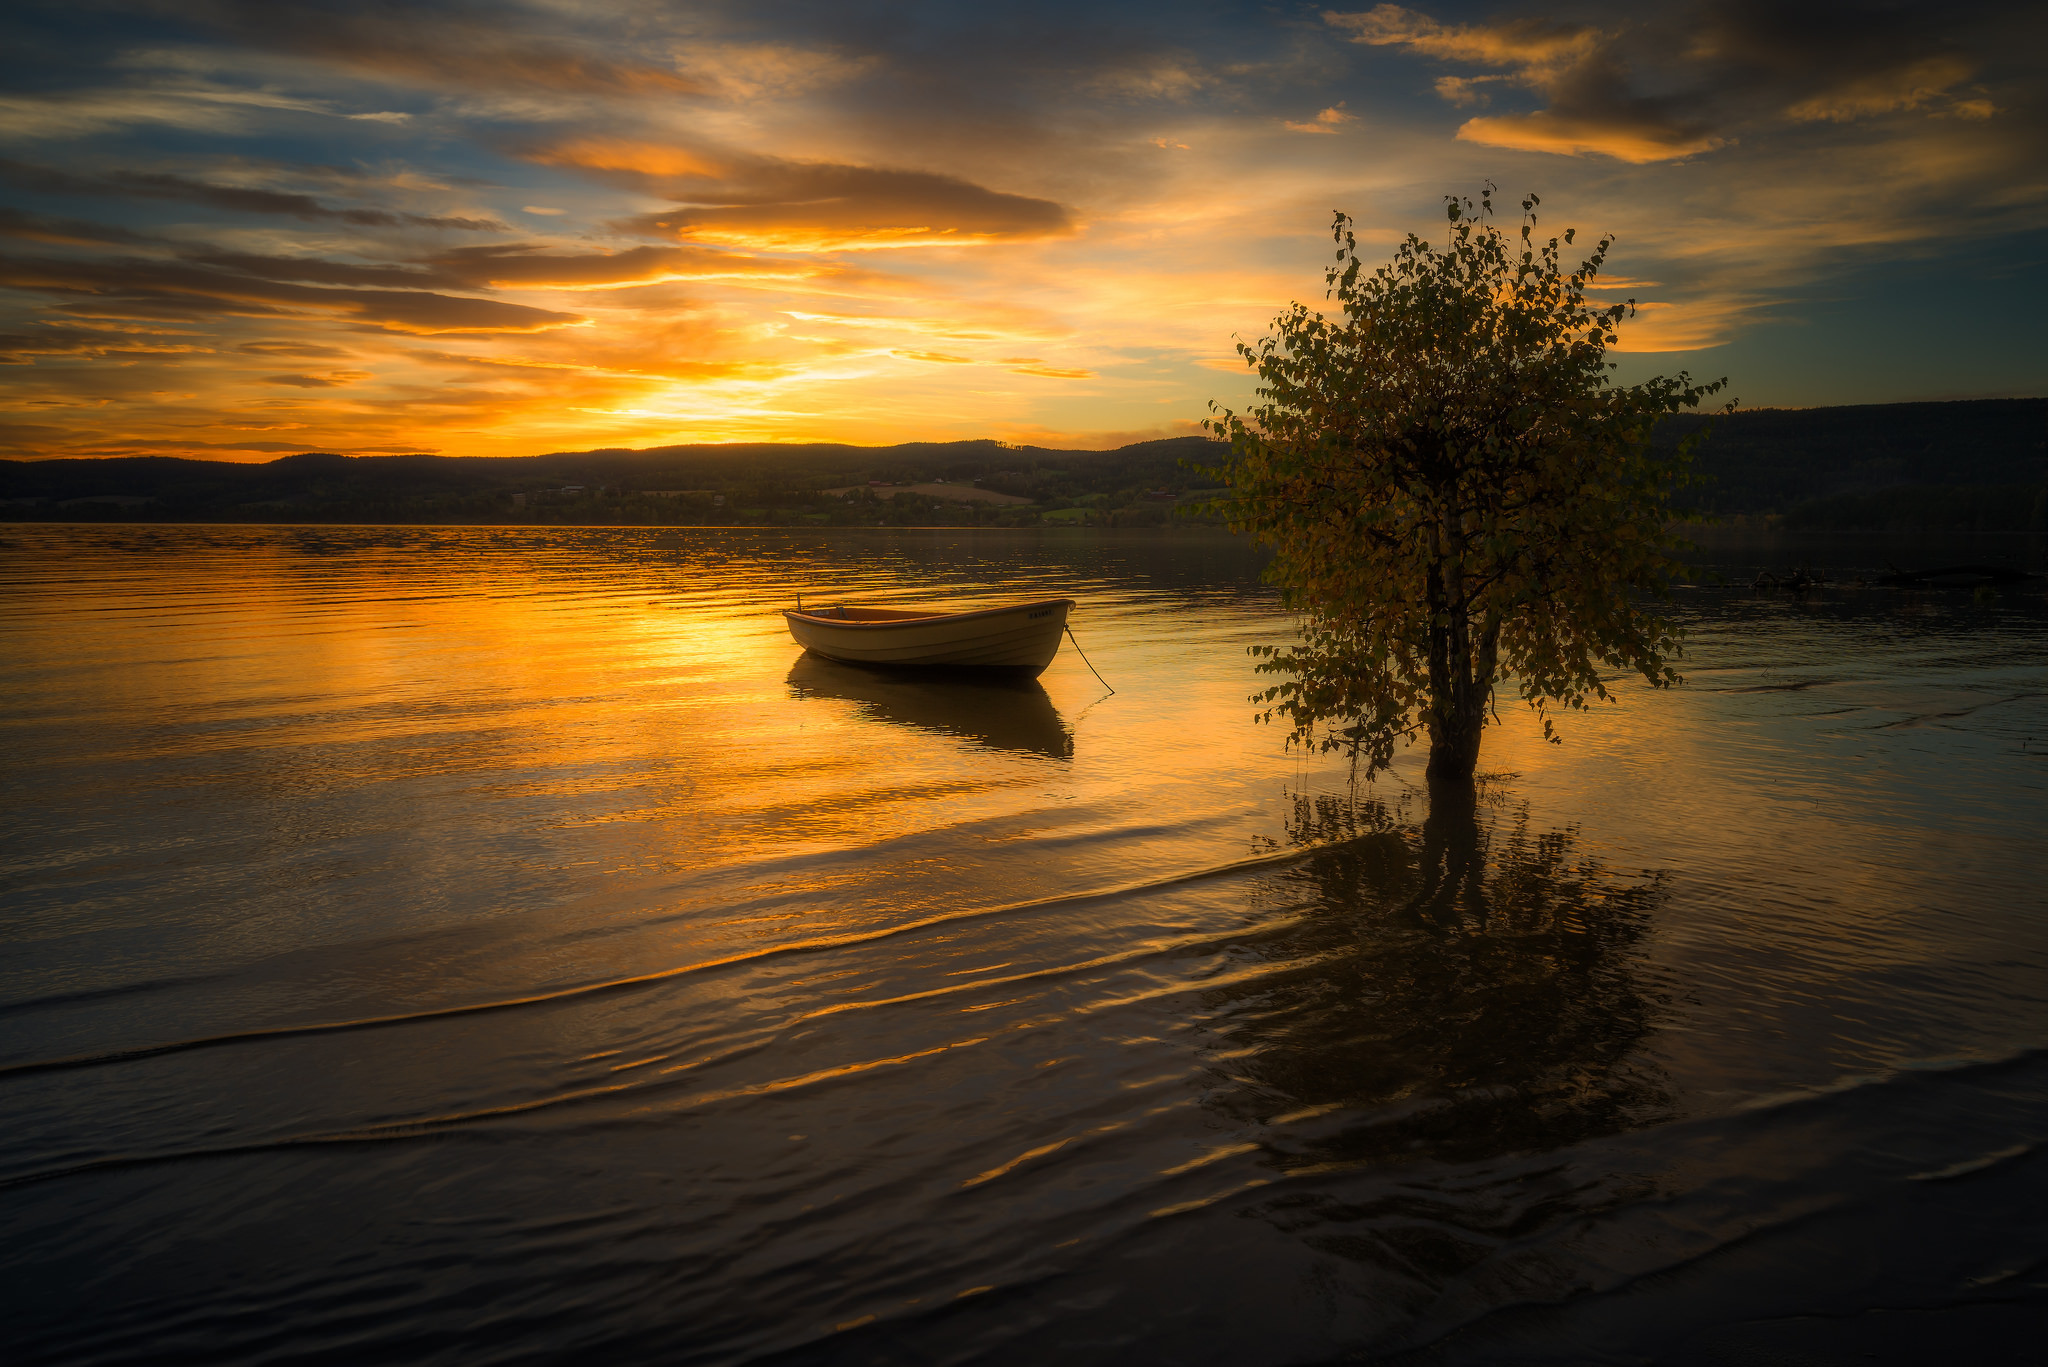 Бесплатное фото Деревянная лодка на озере при закате дня